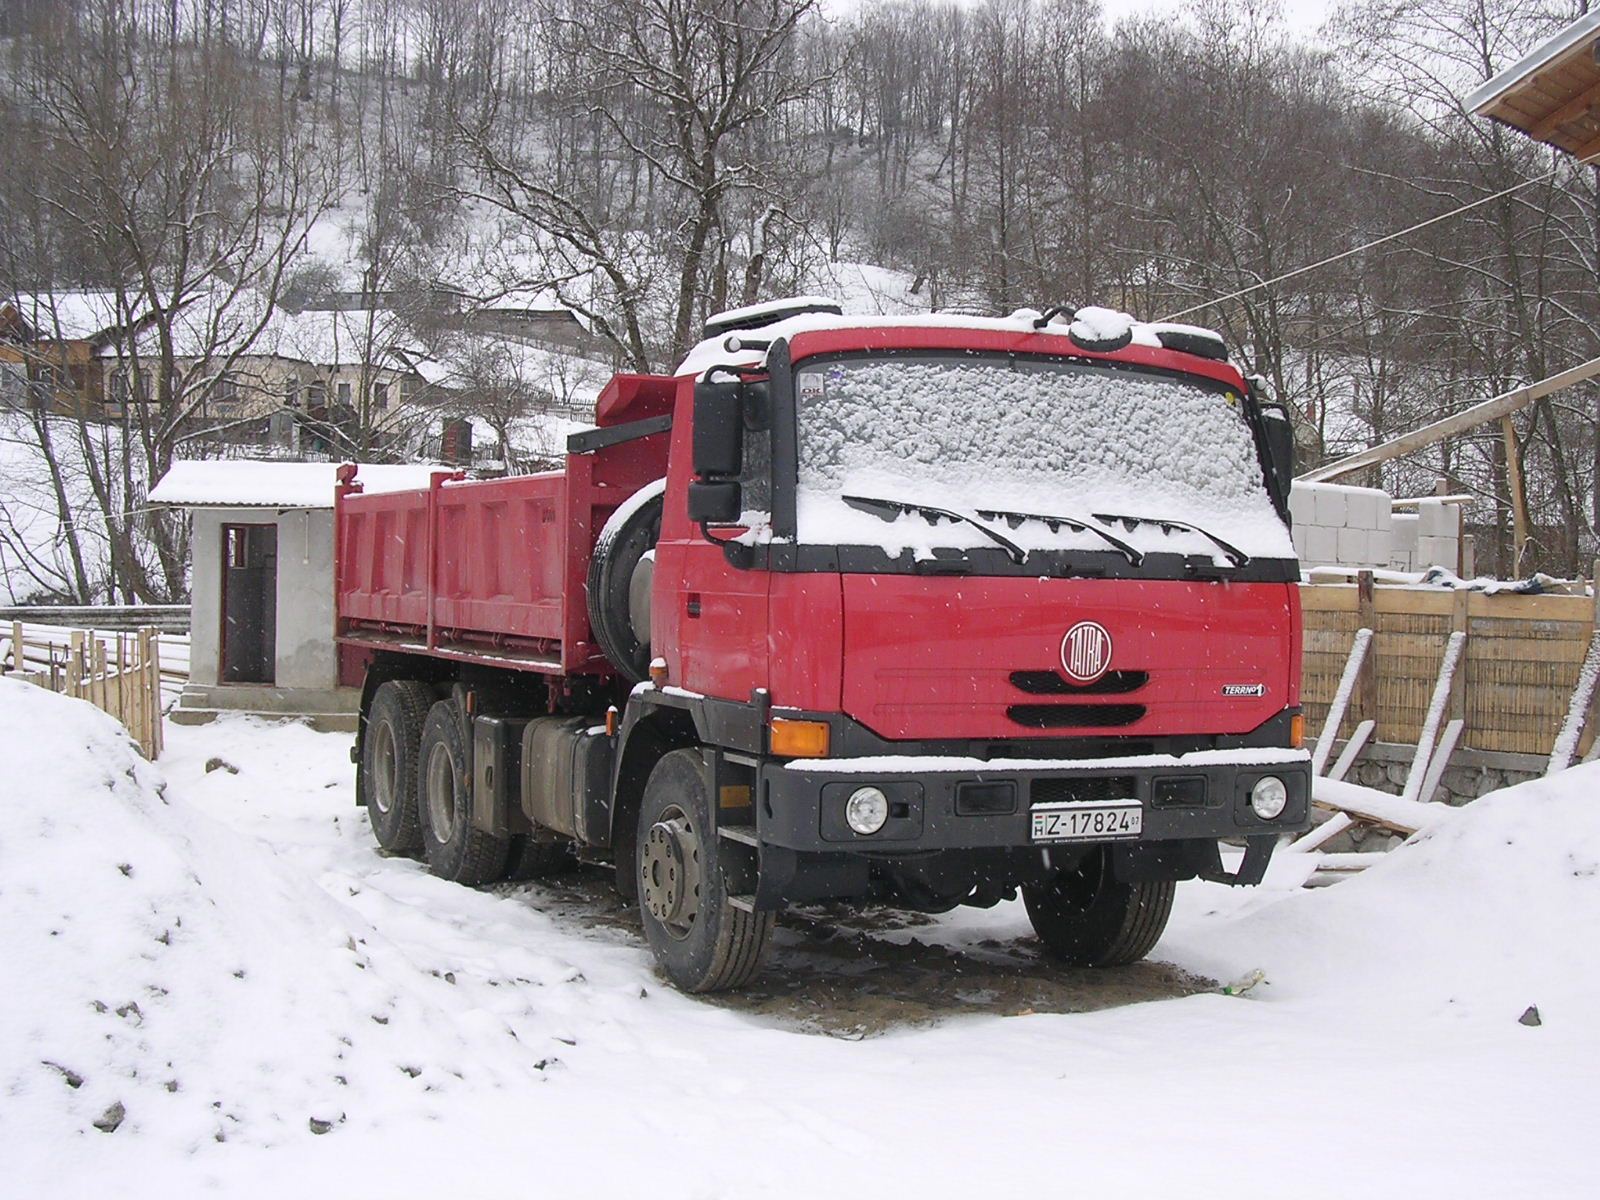 Tatra 815 TERRNÂ°1 Arefu Roumanie neige | Flickr - Partage de photos!